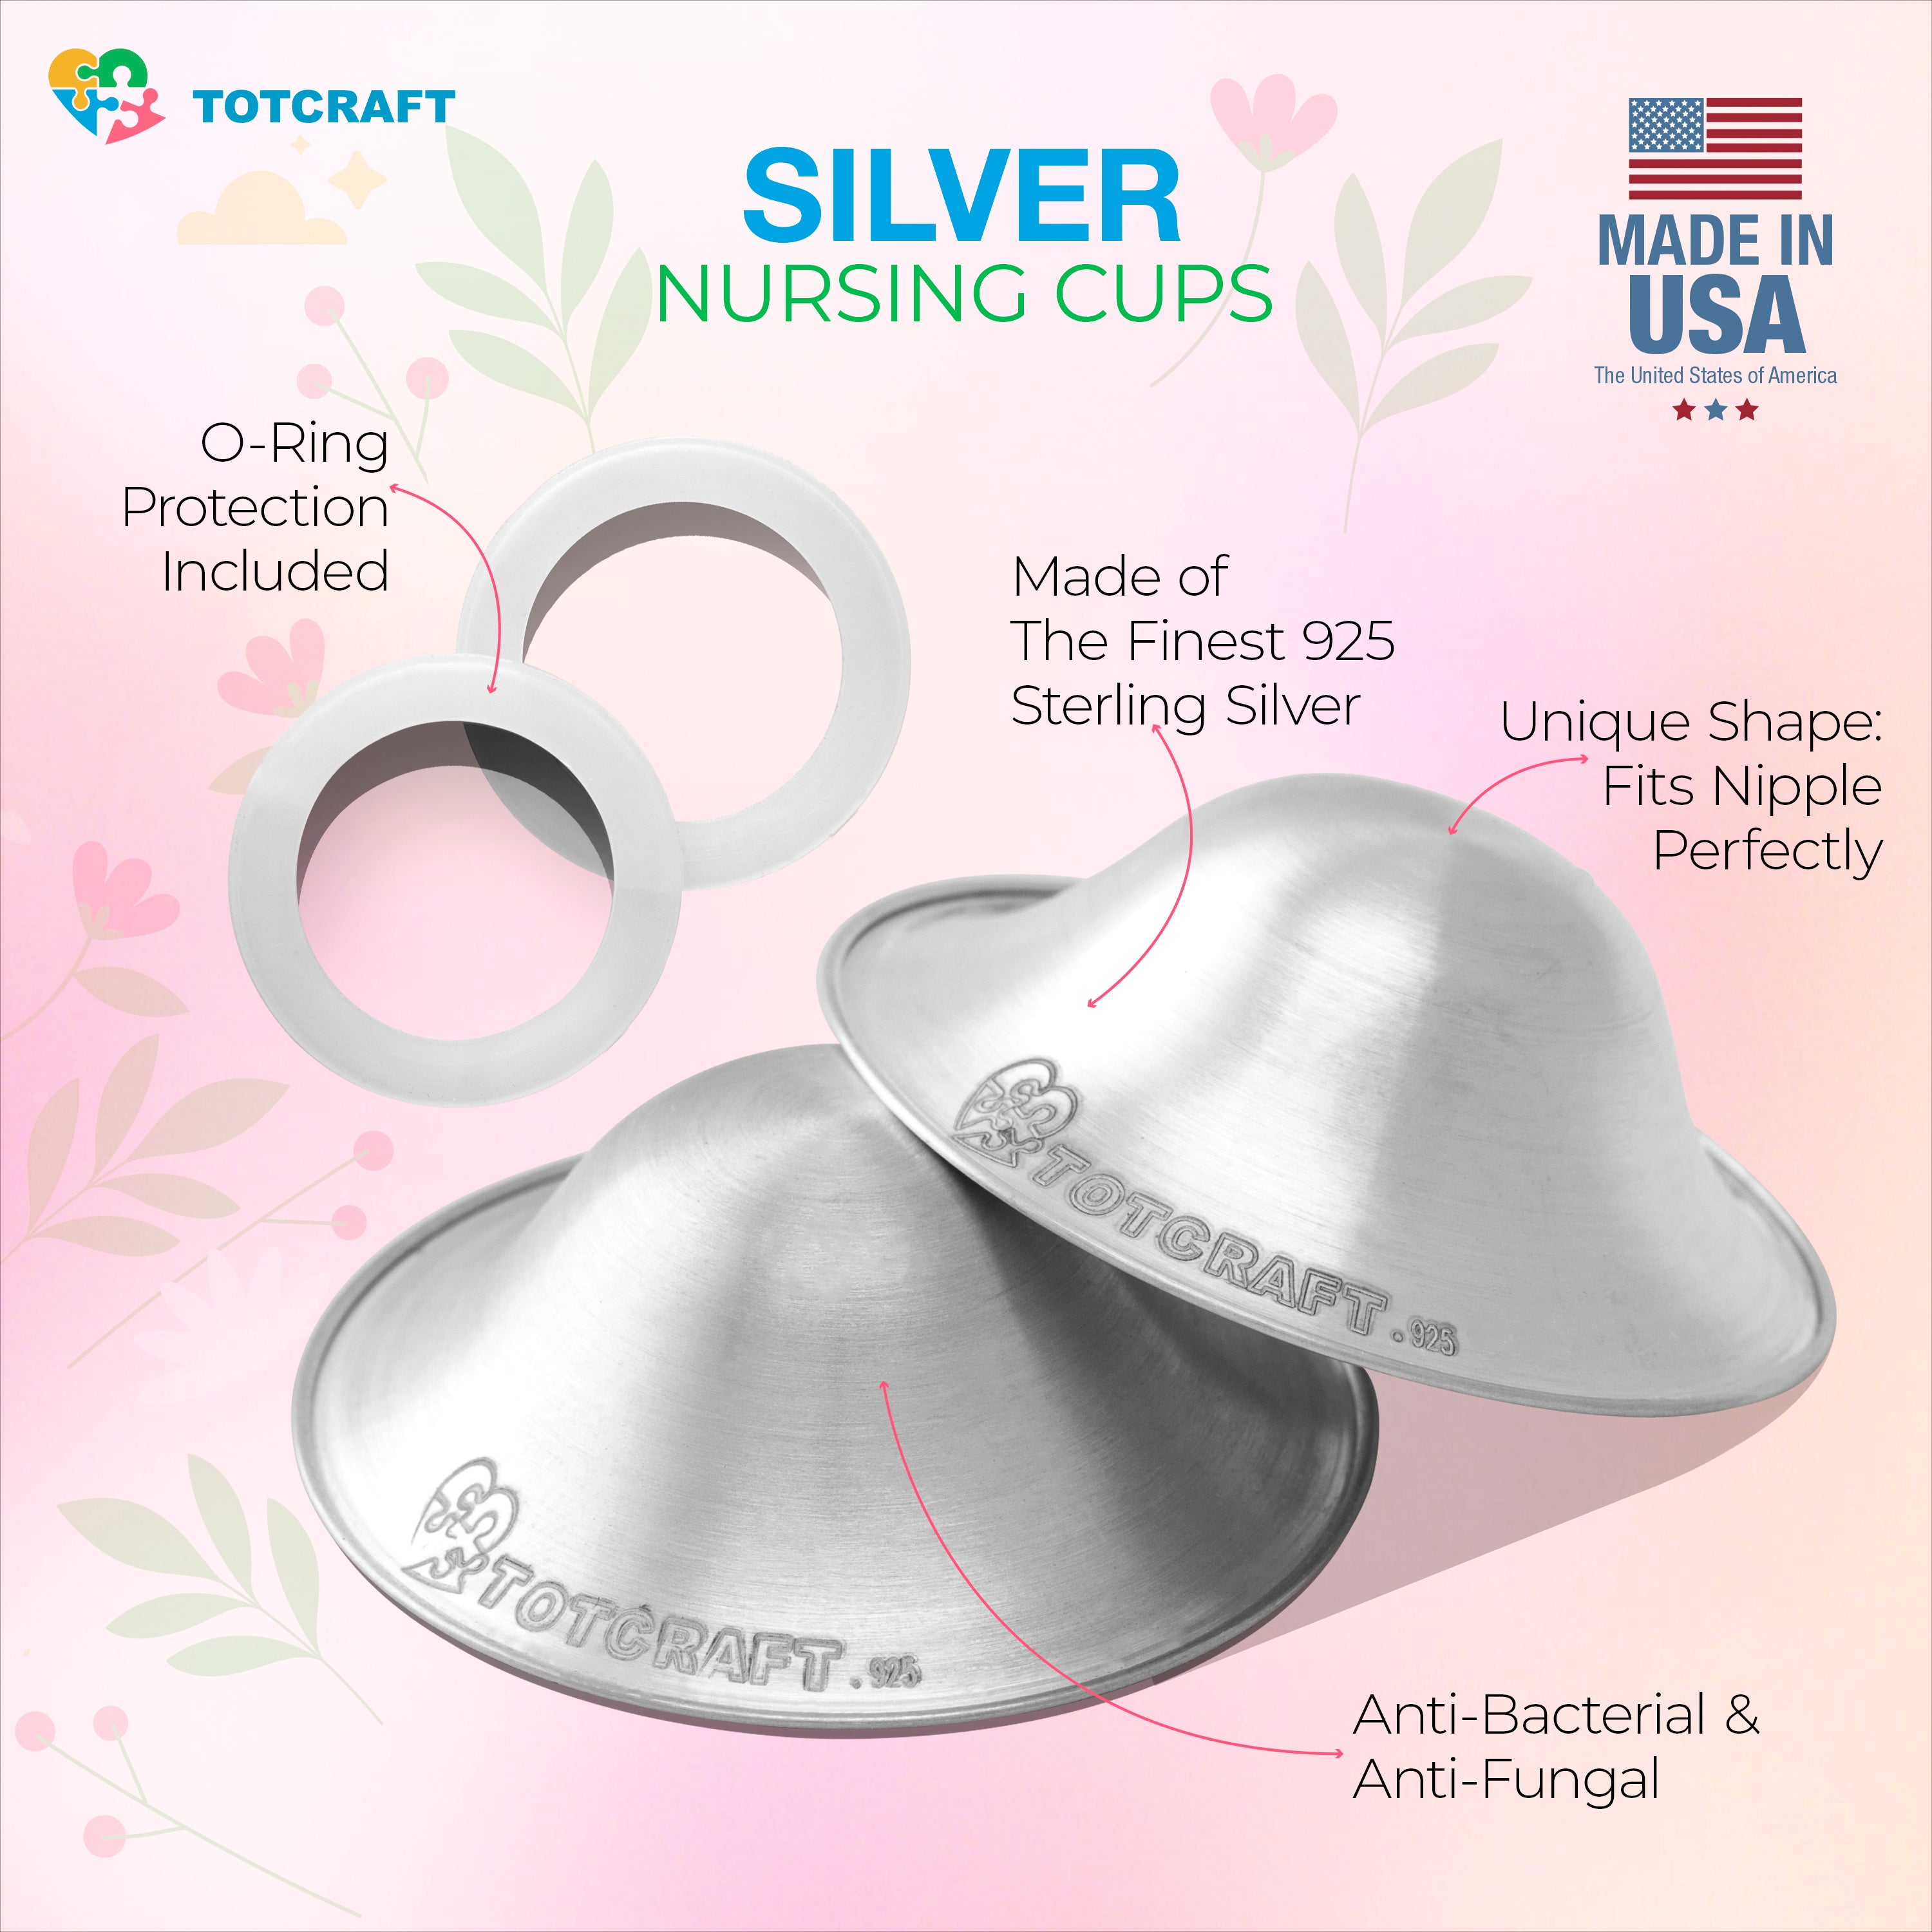 Silver nursing cups